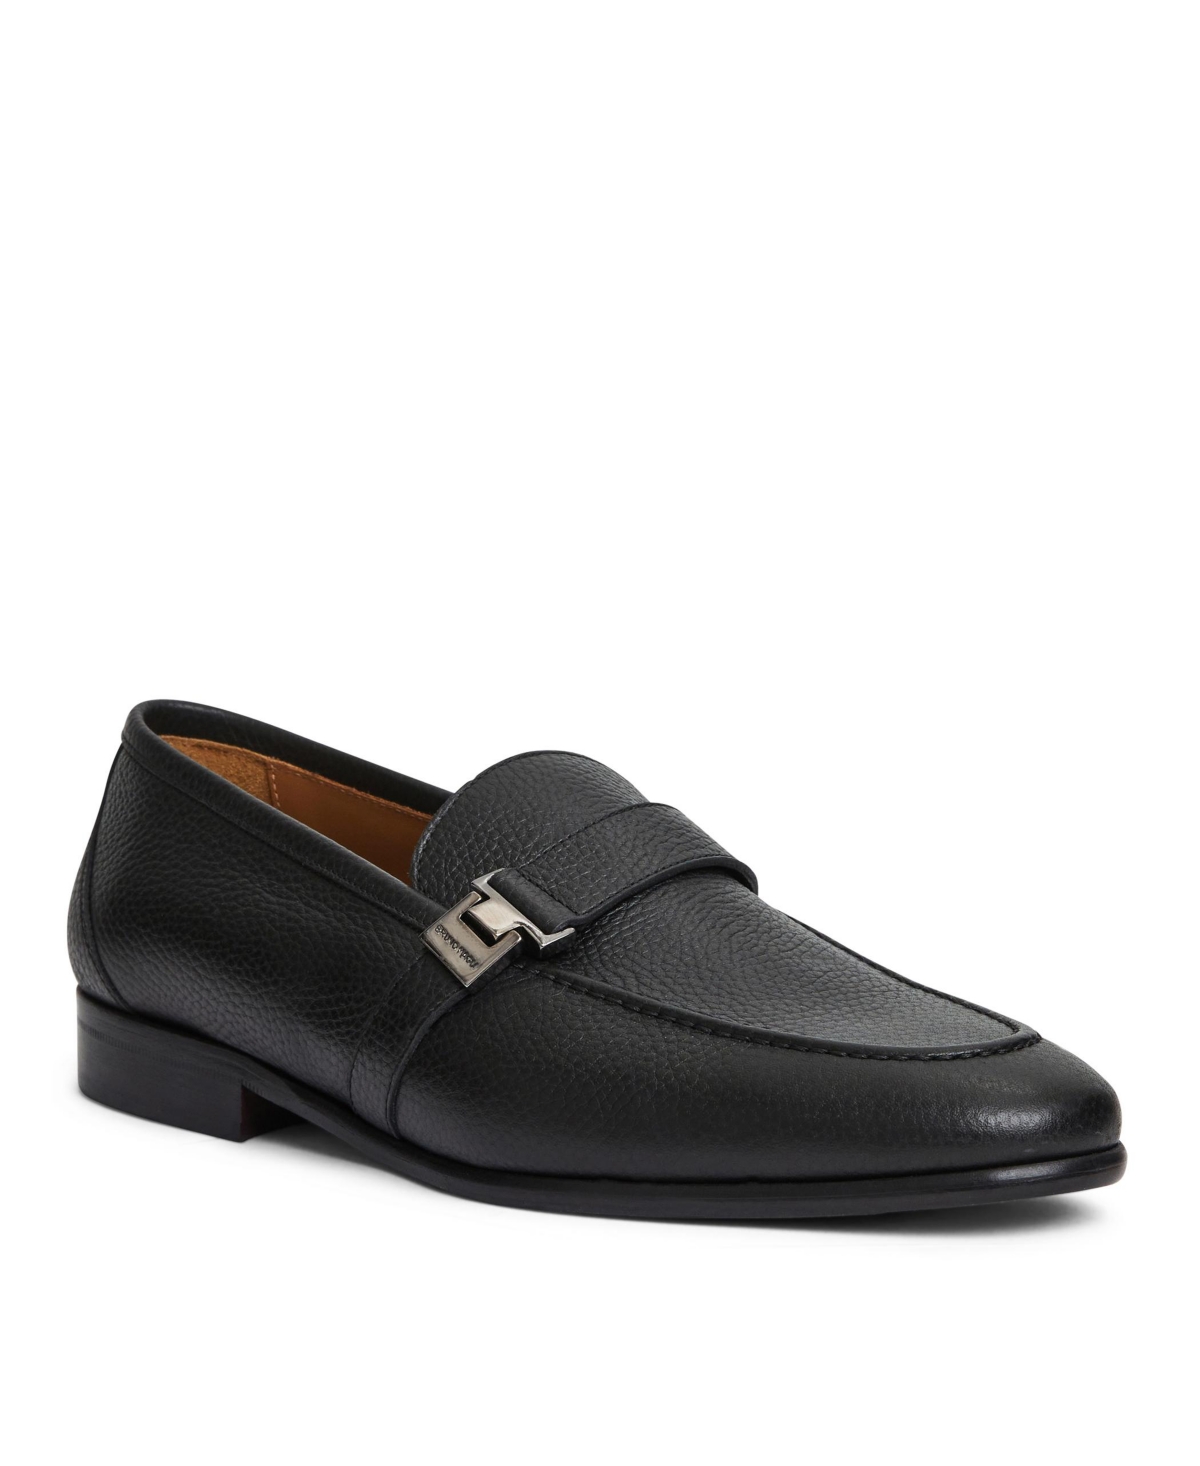 Men's Arlo Leather Shoes - Black Tumbled